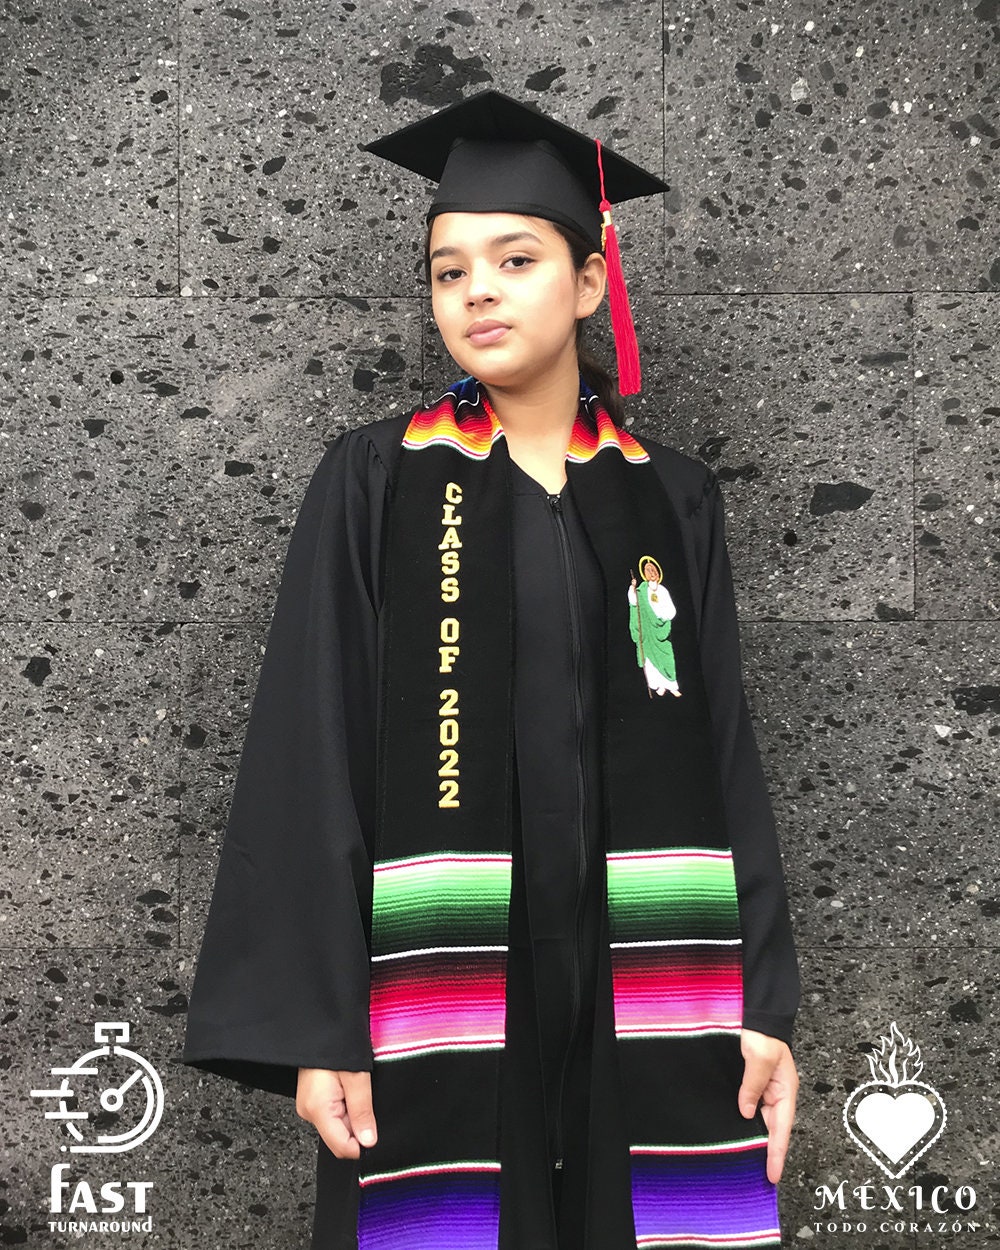 Graduation class of 2021 Mexican sash sarape zarape   Gold   PERSONALIZE  Fast turn around gift SAN JUDAS tadeo graduation gift white 2021